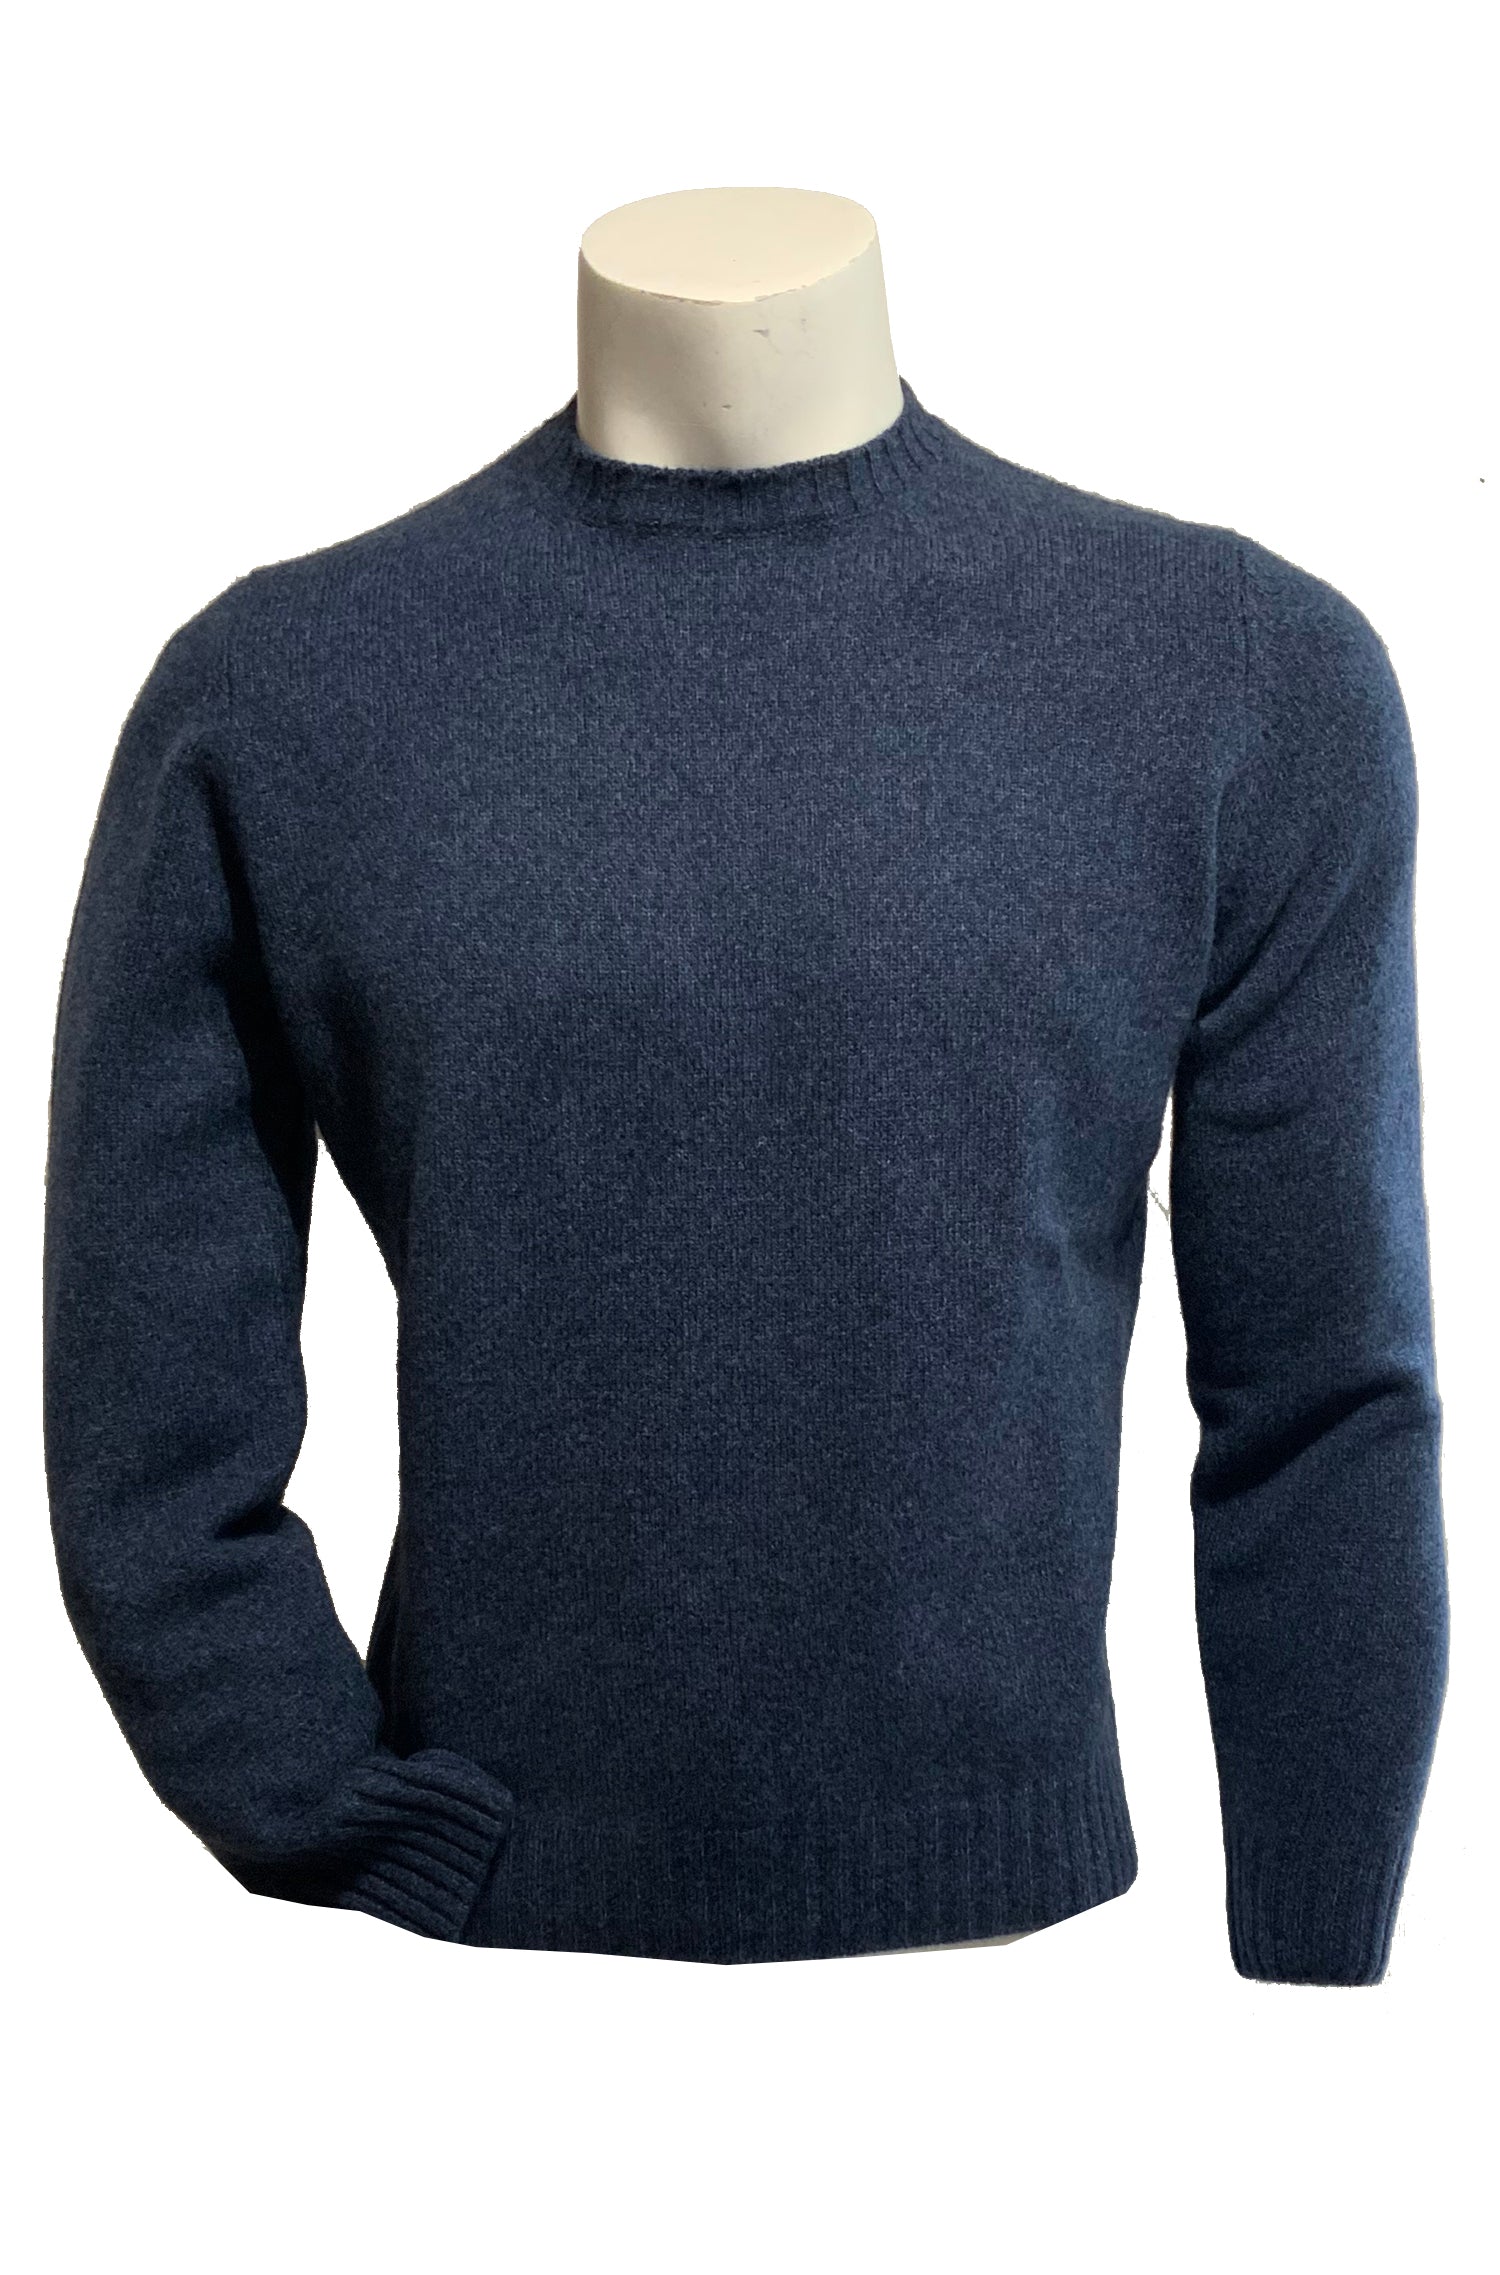 FILIPPO DE LAURENTIIS - Mottled Blue Wool & Cashmere Crew Neck Sweater GC3MLWC7R880